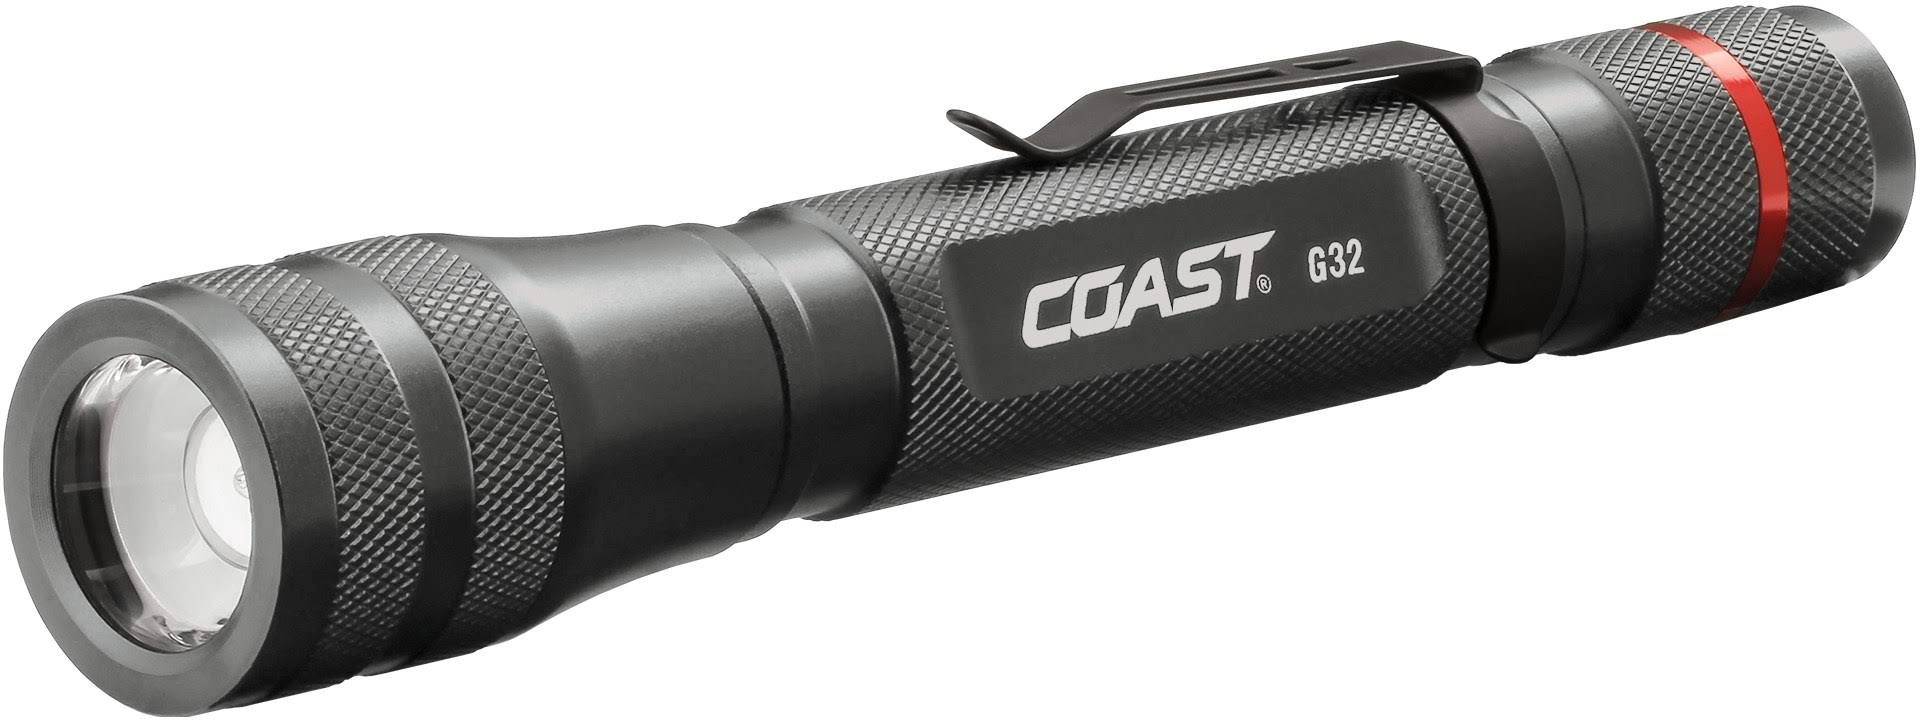 Coast G32 Flashlight 661728